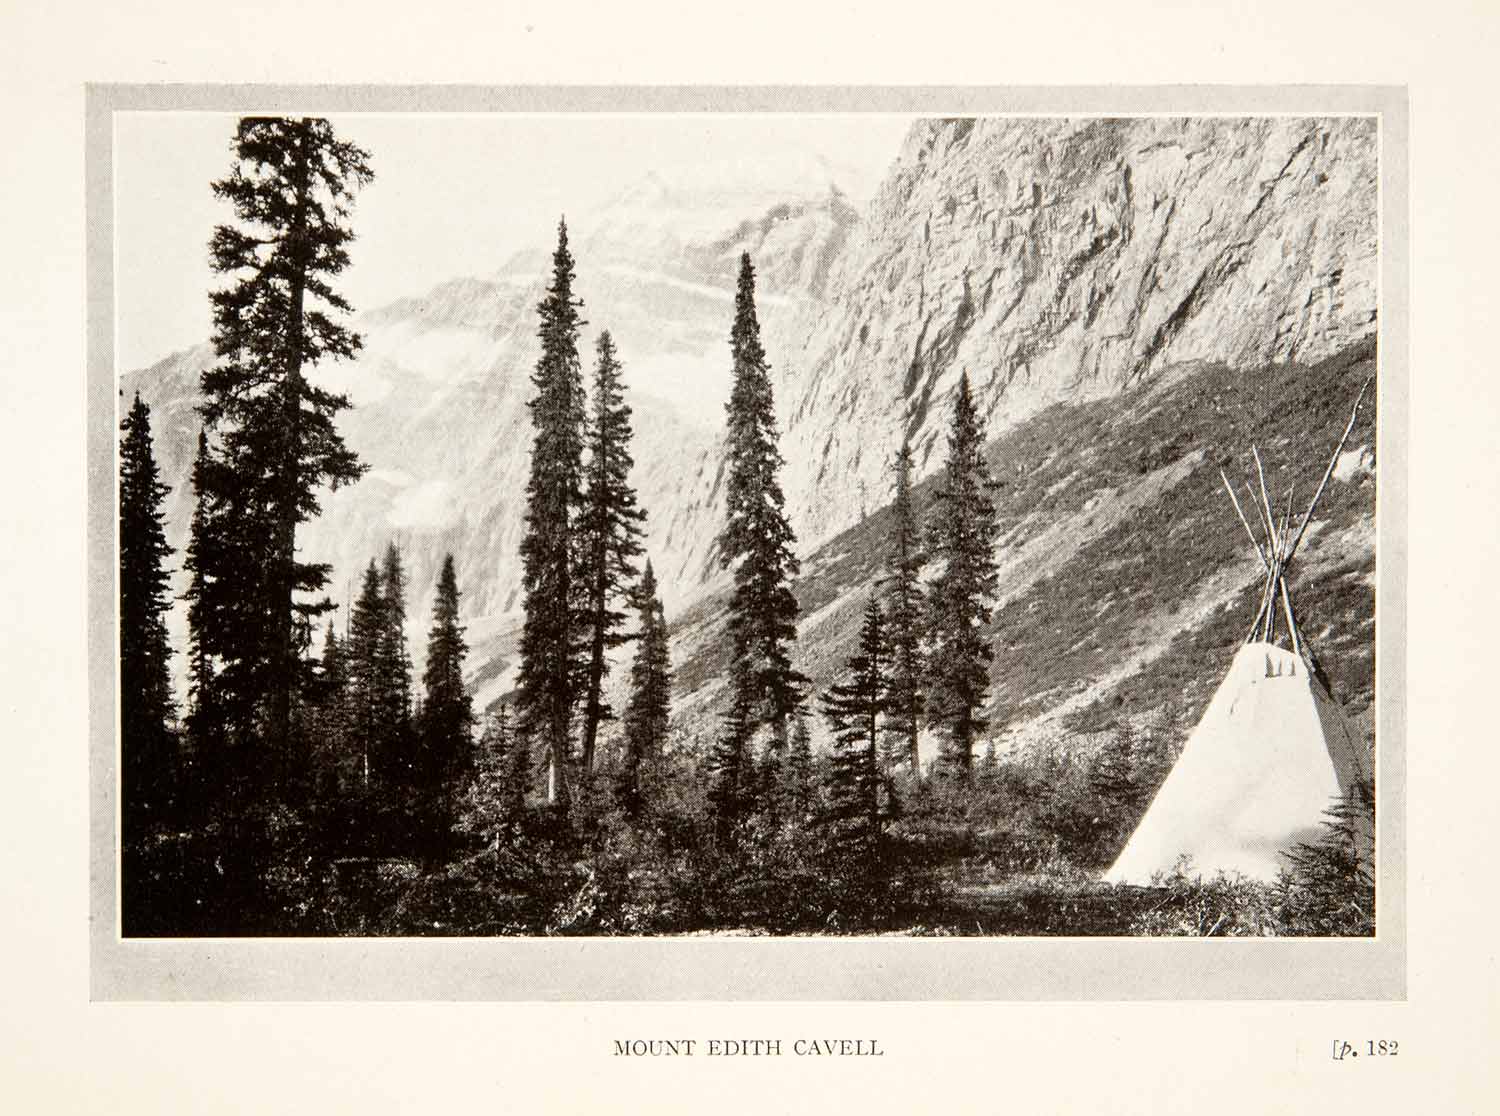 1926 Print Mountain Edith Cavell Jasper National Park Alberta Canada XGZB5